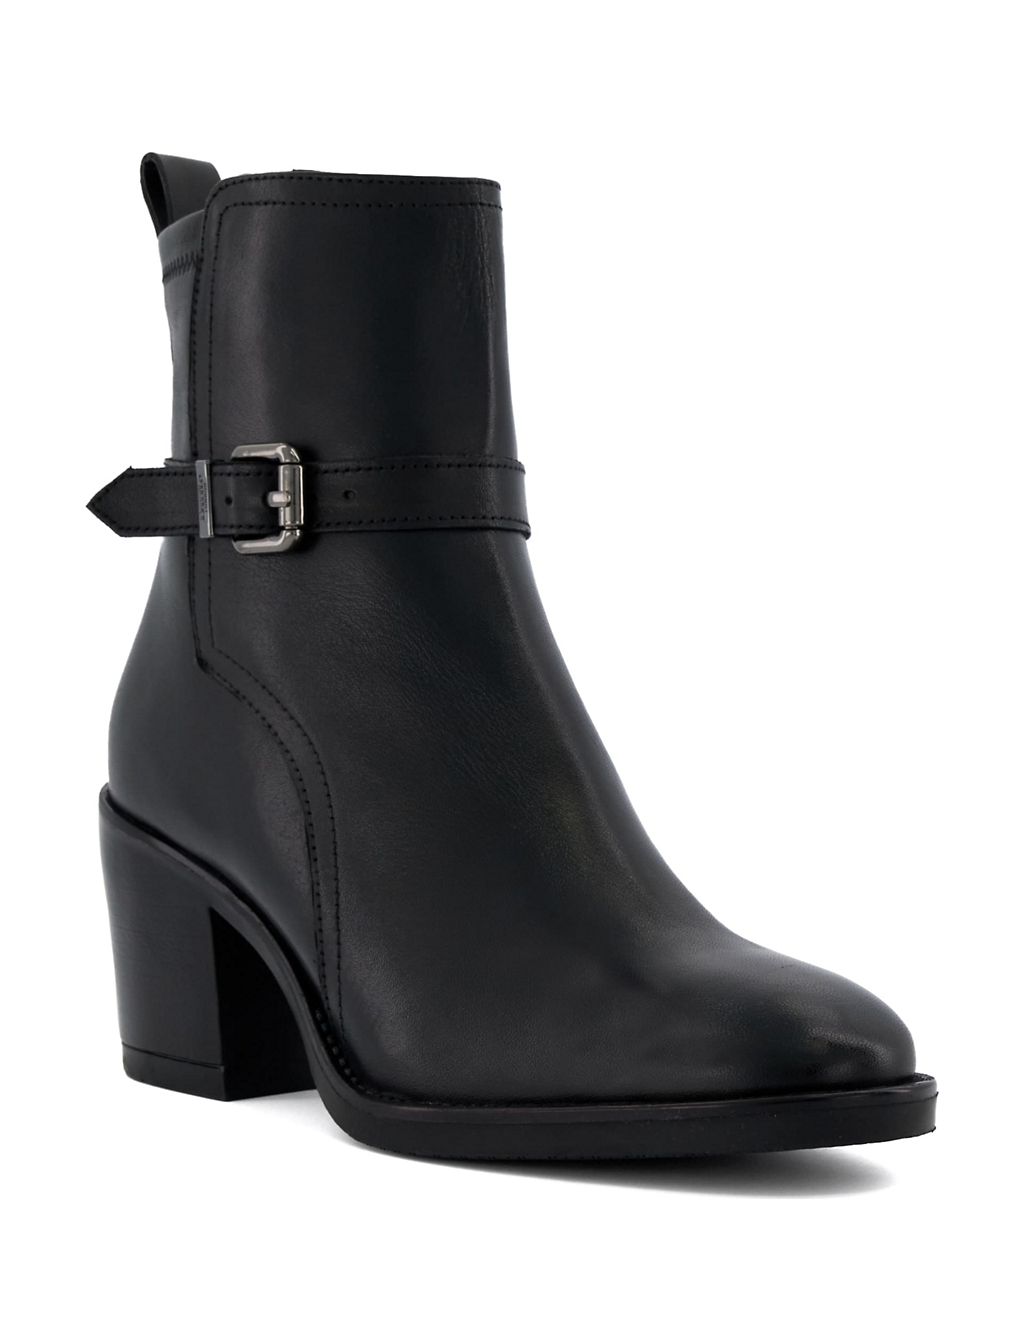 Leather Chelsea Buckle Block Heel Boots | Dune London | M&S